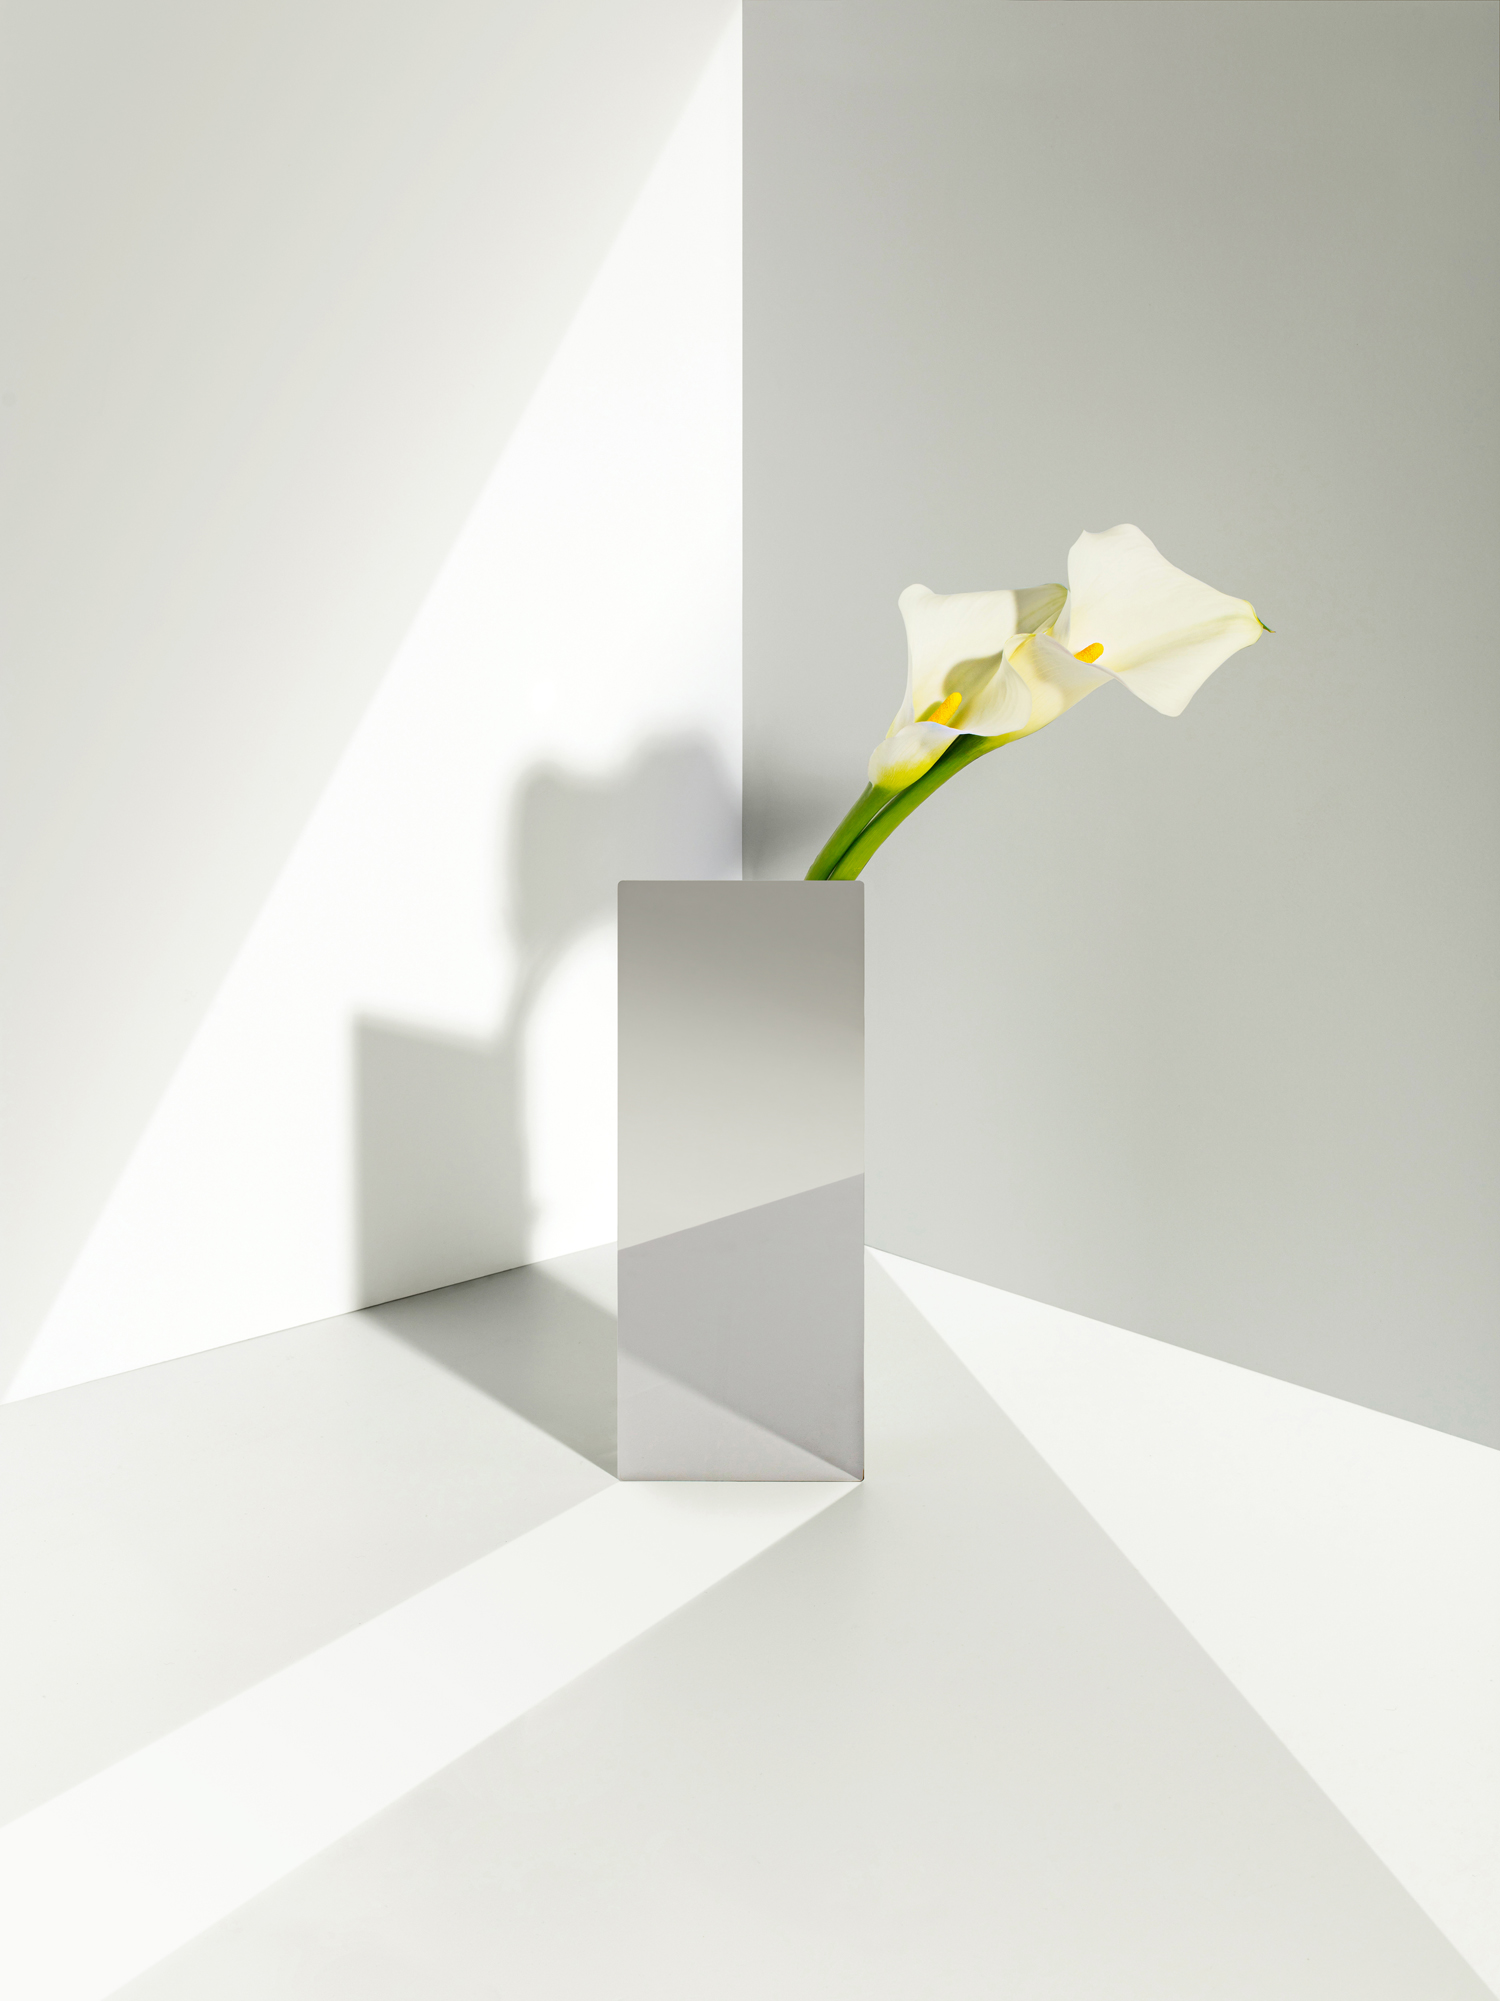 Minimalist Vase "A Mirror Face" by Seoul-based studio ADAO